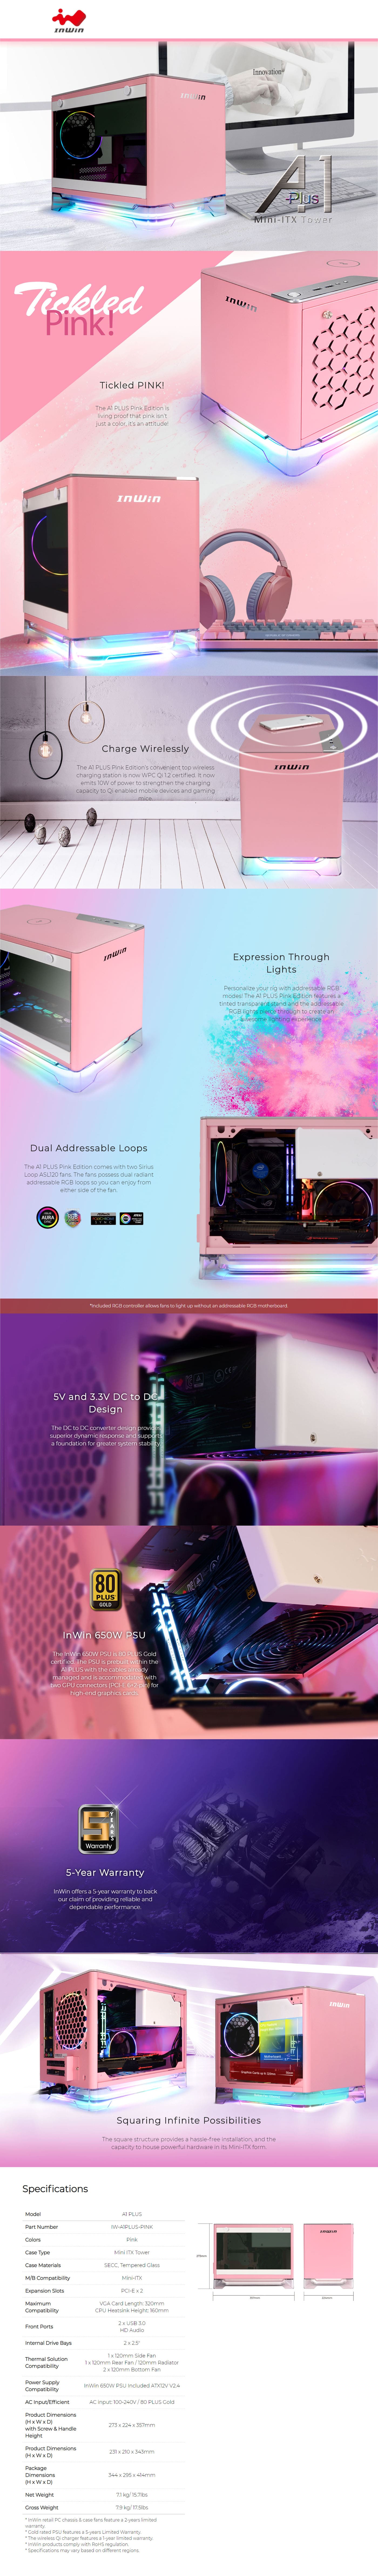 Buy Online InWin A1 Plus Mini ITX Tower with 650w PSU - Pink